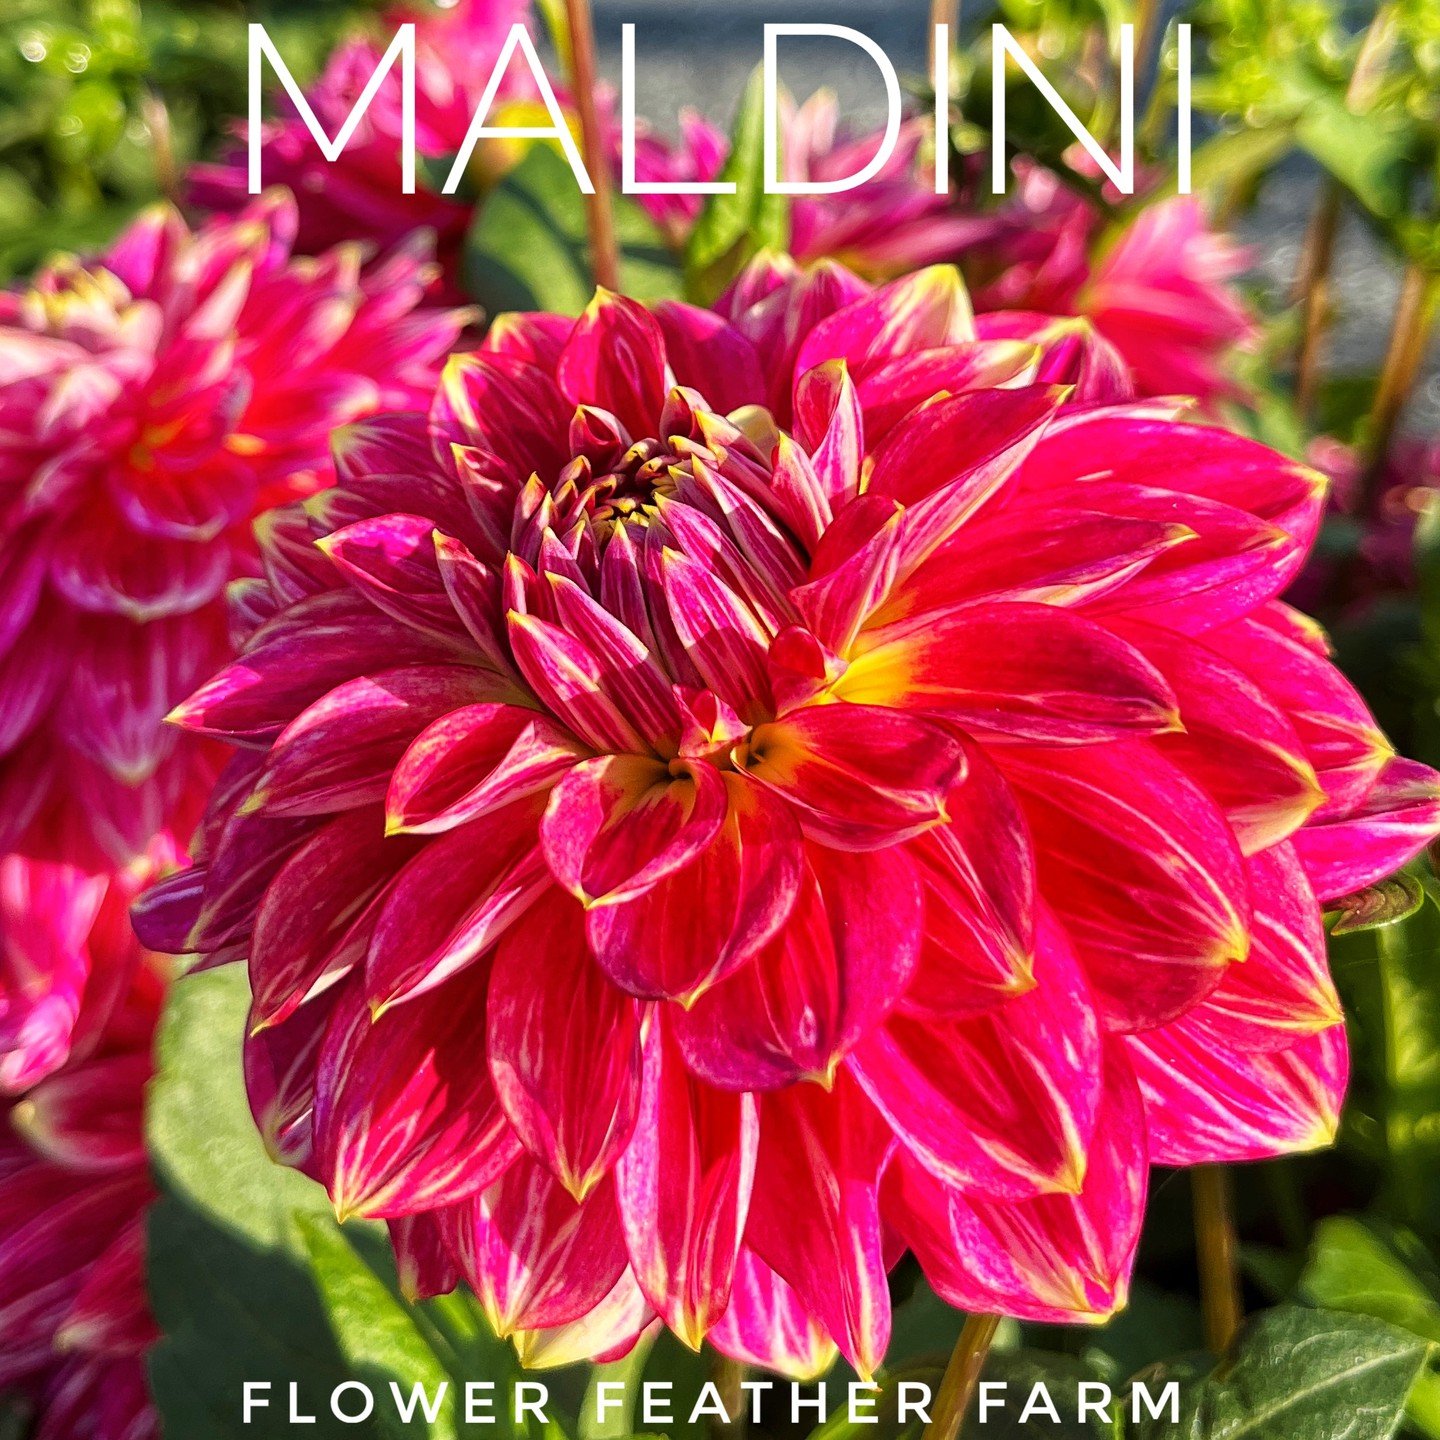 Maldini: Magenta-pink petals with white tips. Stunning and a prolific bloomer.

Bloom Size: 4-5 inches; Height: 3 feet; Type: Decorative

#Maldini #dahlia #dahliatubers #dahliaseason 
https://www.flowerfeatherfarm.com/dahlia-tubers/p/maldini-dahlia-t